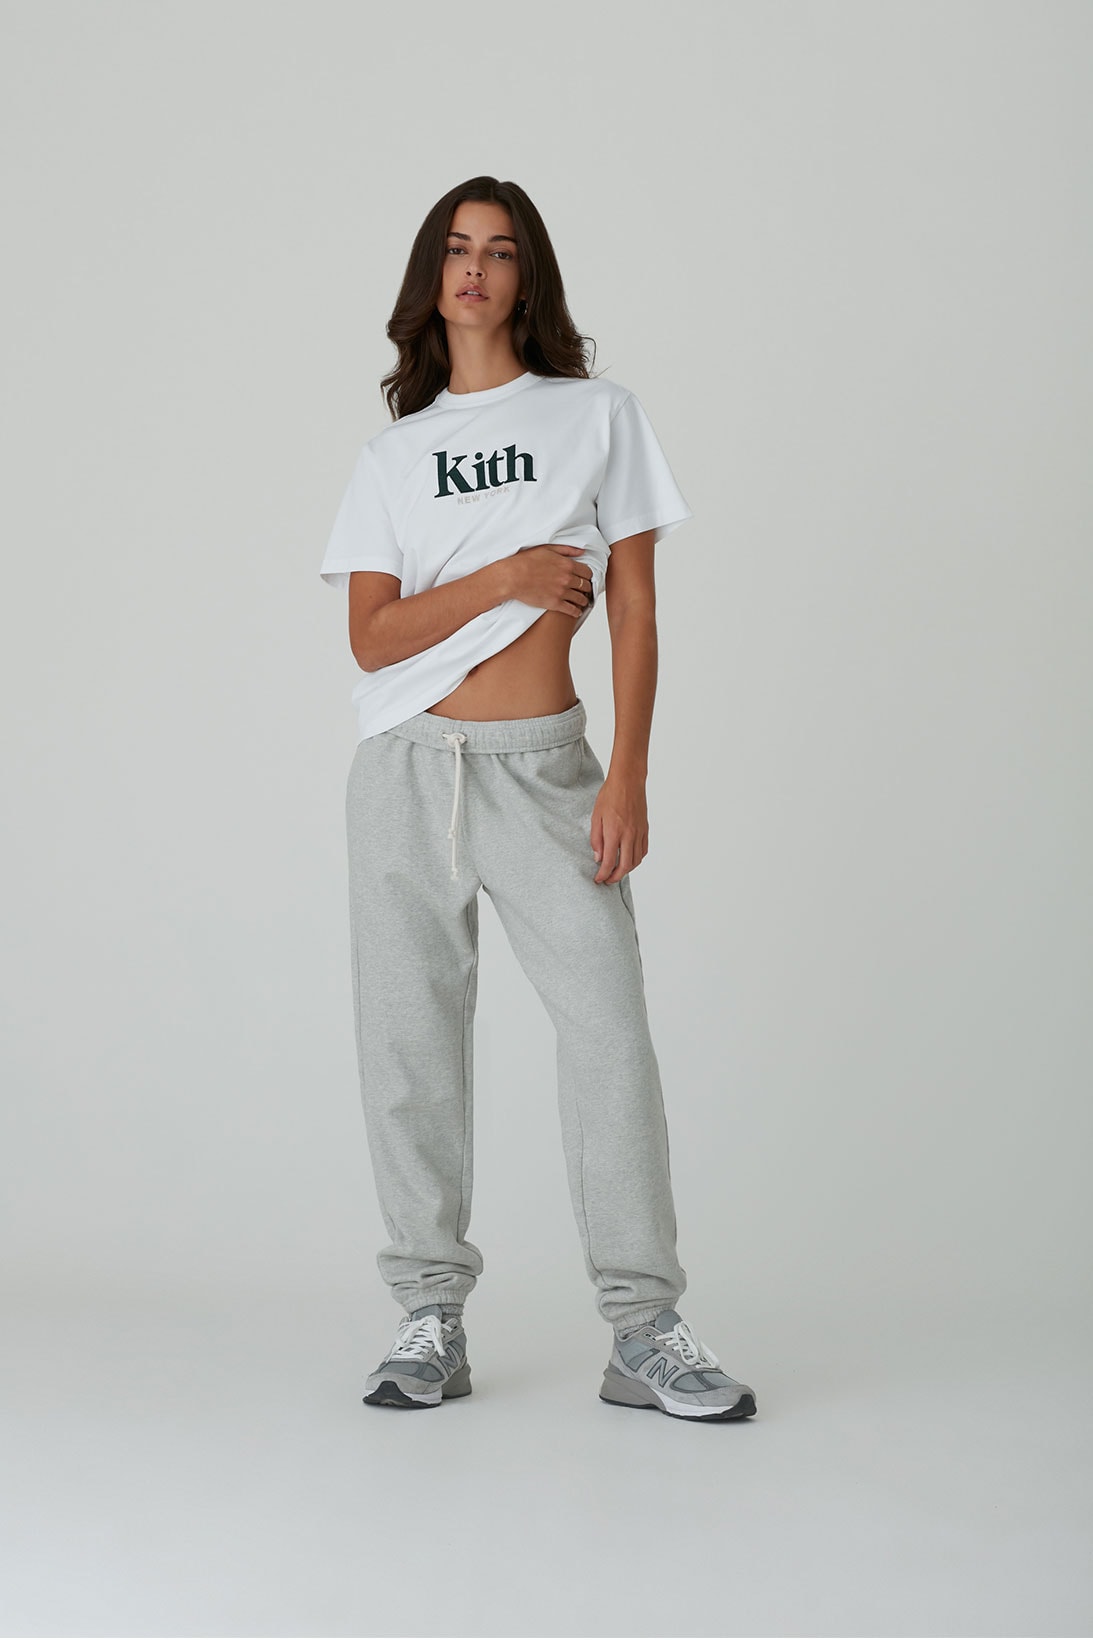 kith women spring 2021 collection logo t-shirt white jogger pants sweats